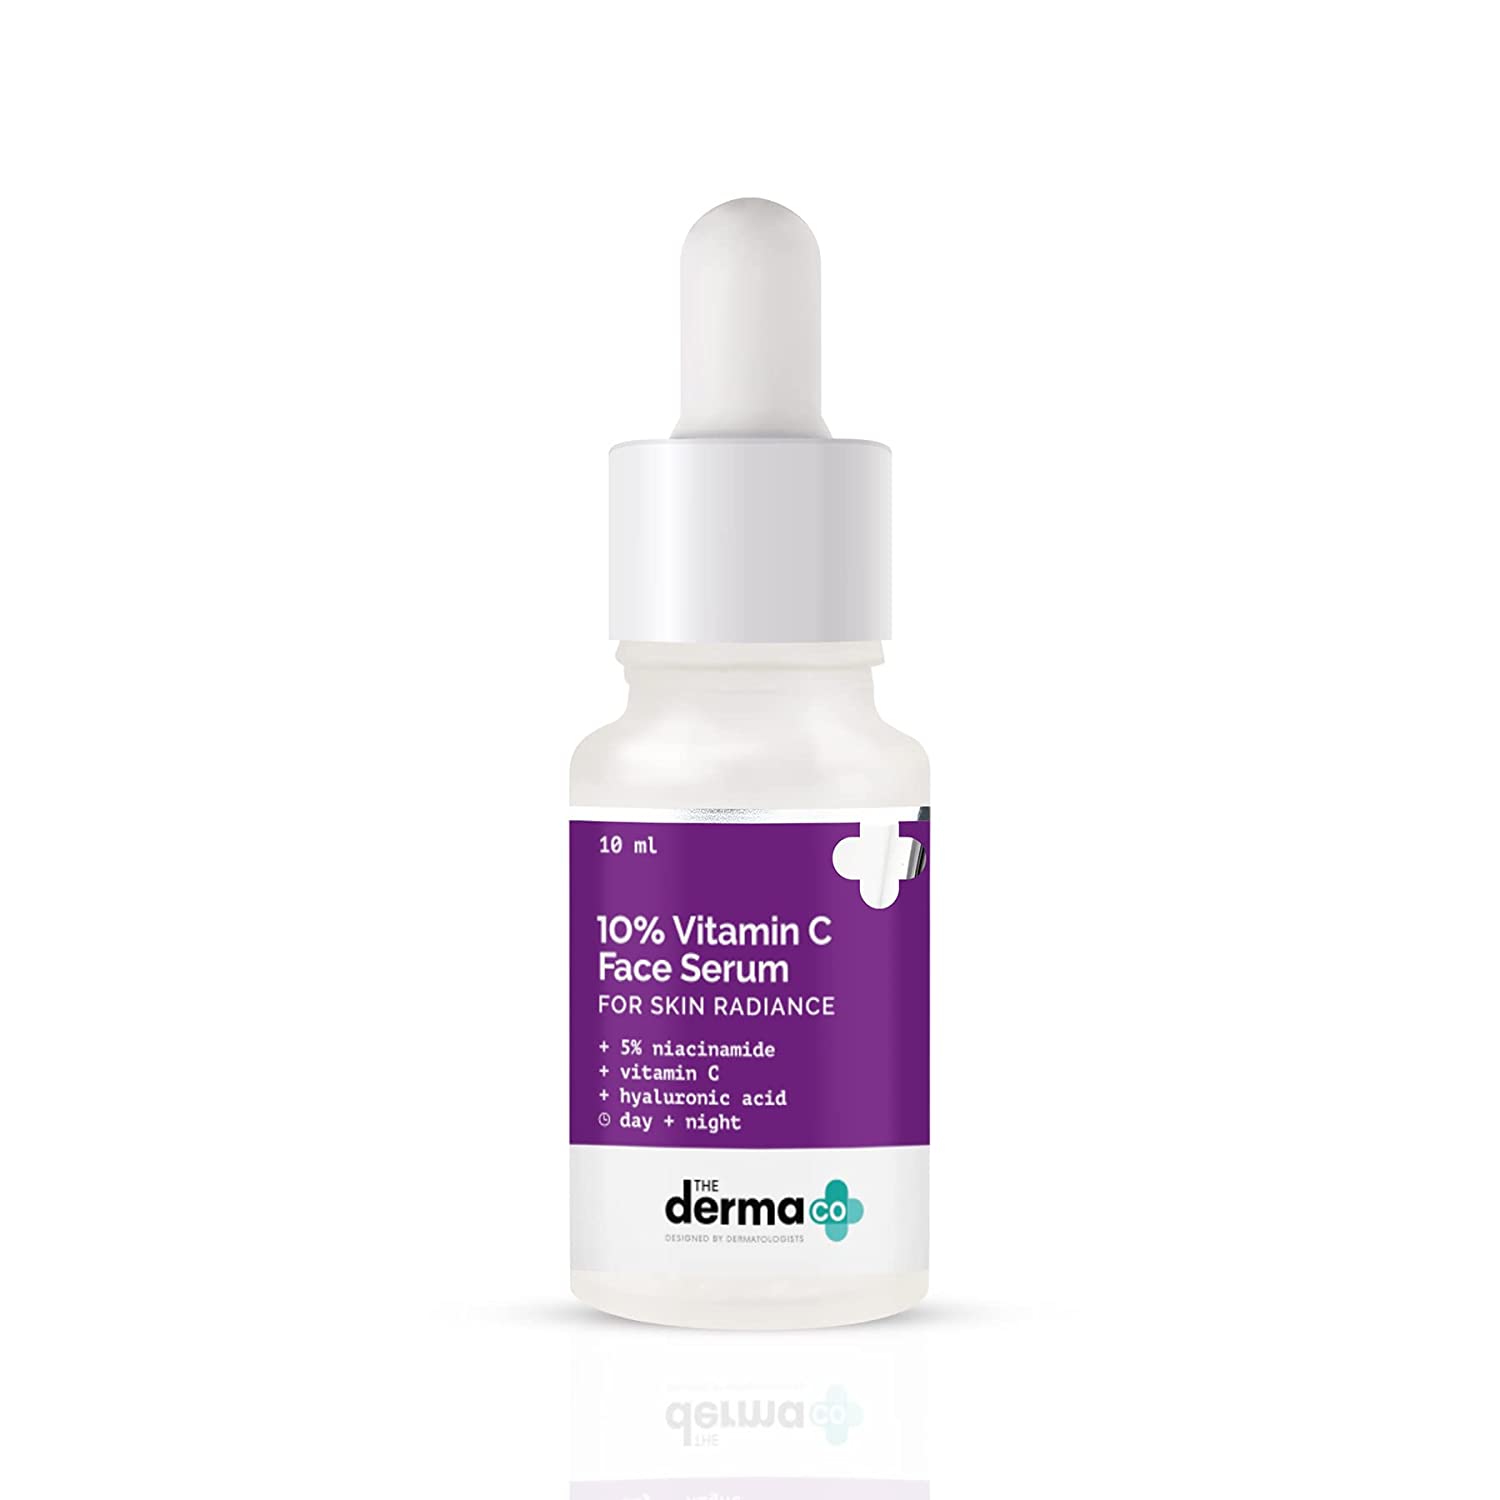 Buy The Derma Co 10% Vitamin C Face Serum online usa [ USA ] 